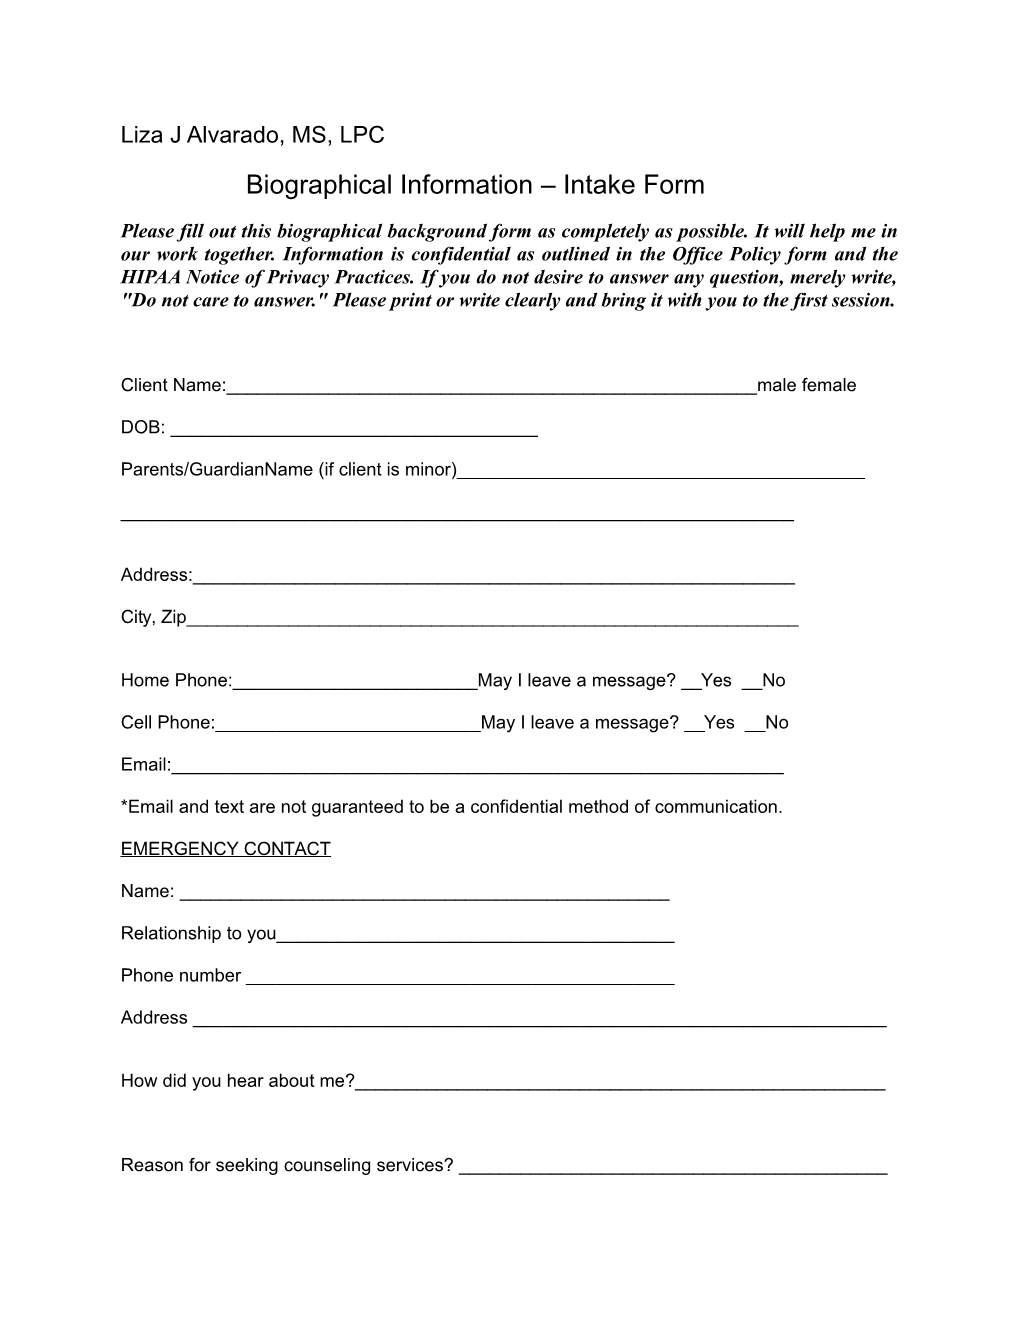 Biographical Information Intake Form